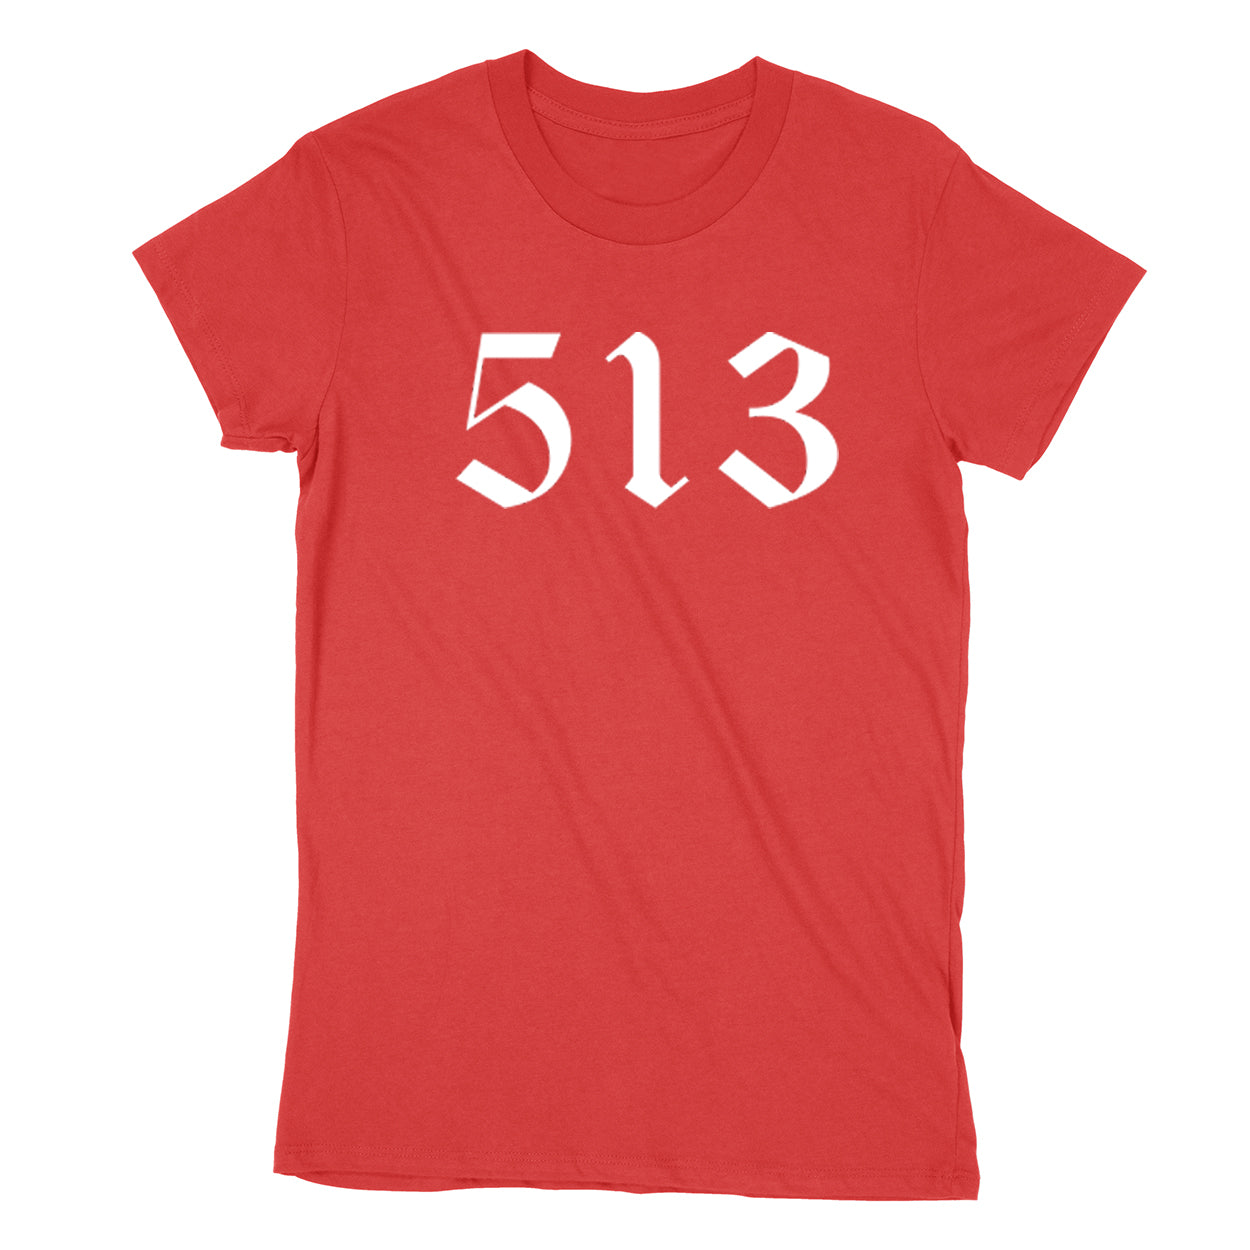 513 White Women's T-Shirt - Clothe Ohio - Soft Ohio Shirts